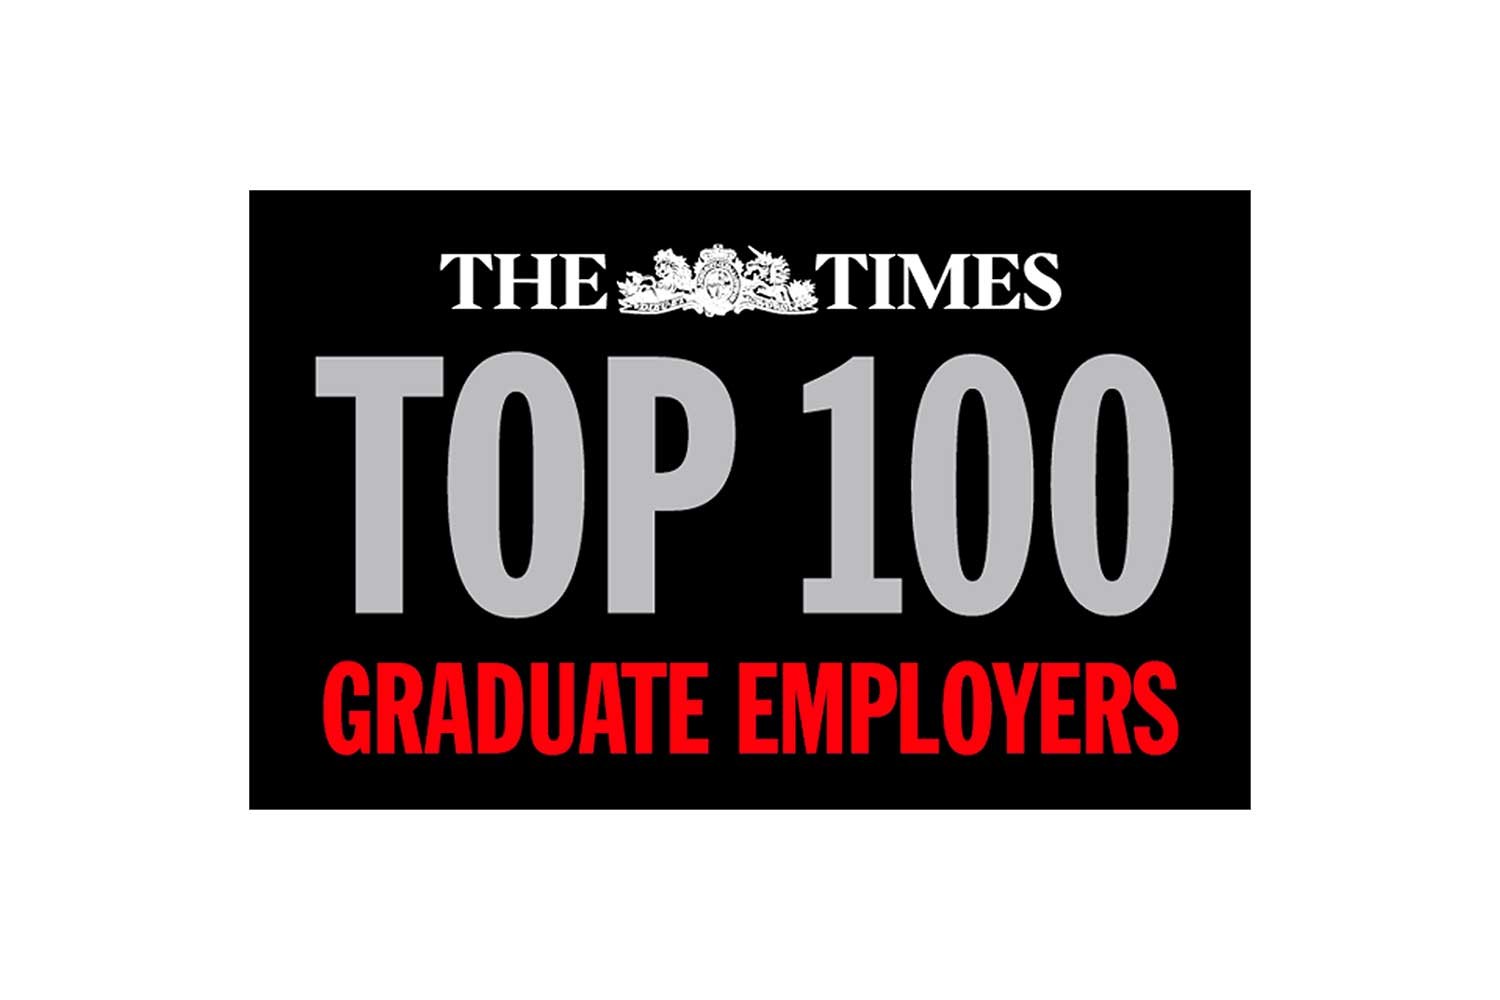 Times Top 100 Graduate employers logo